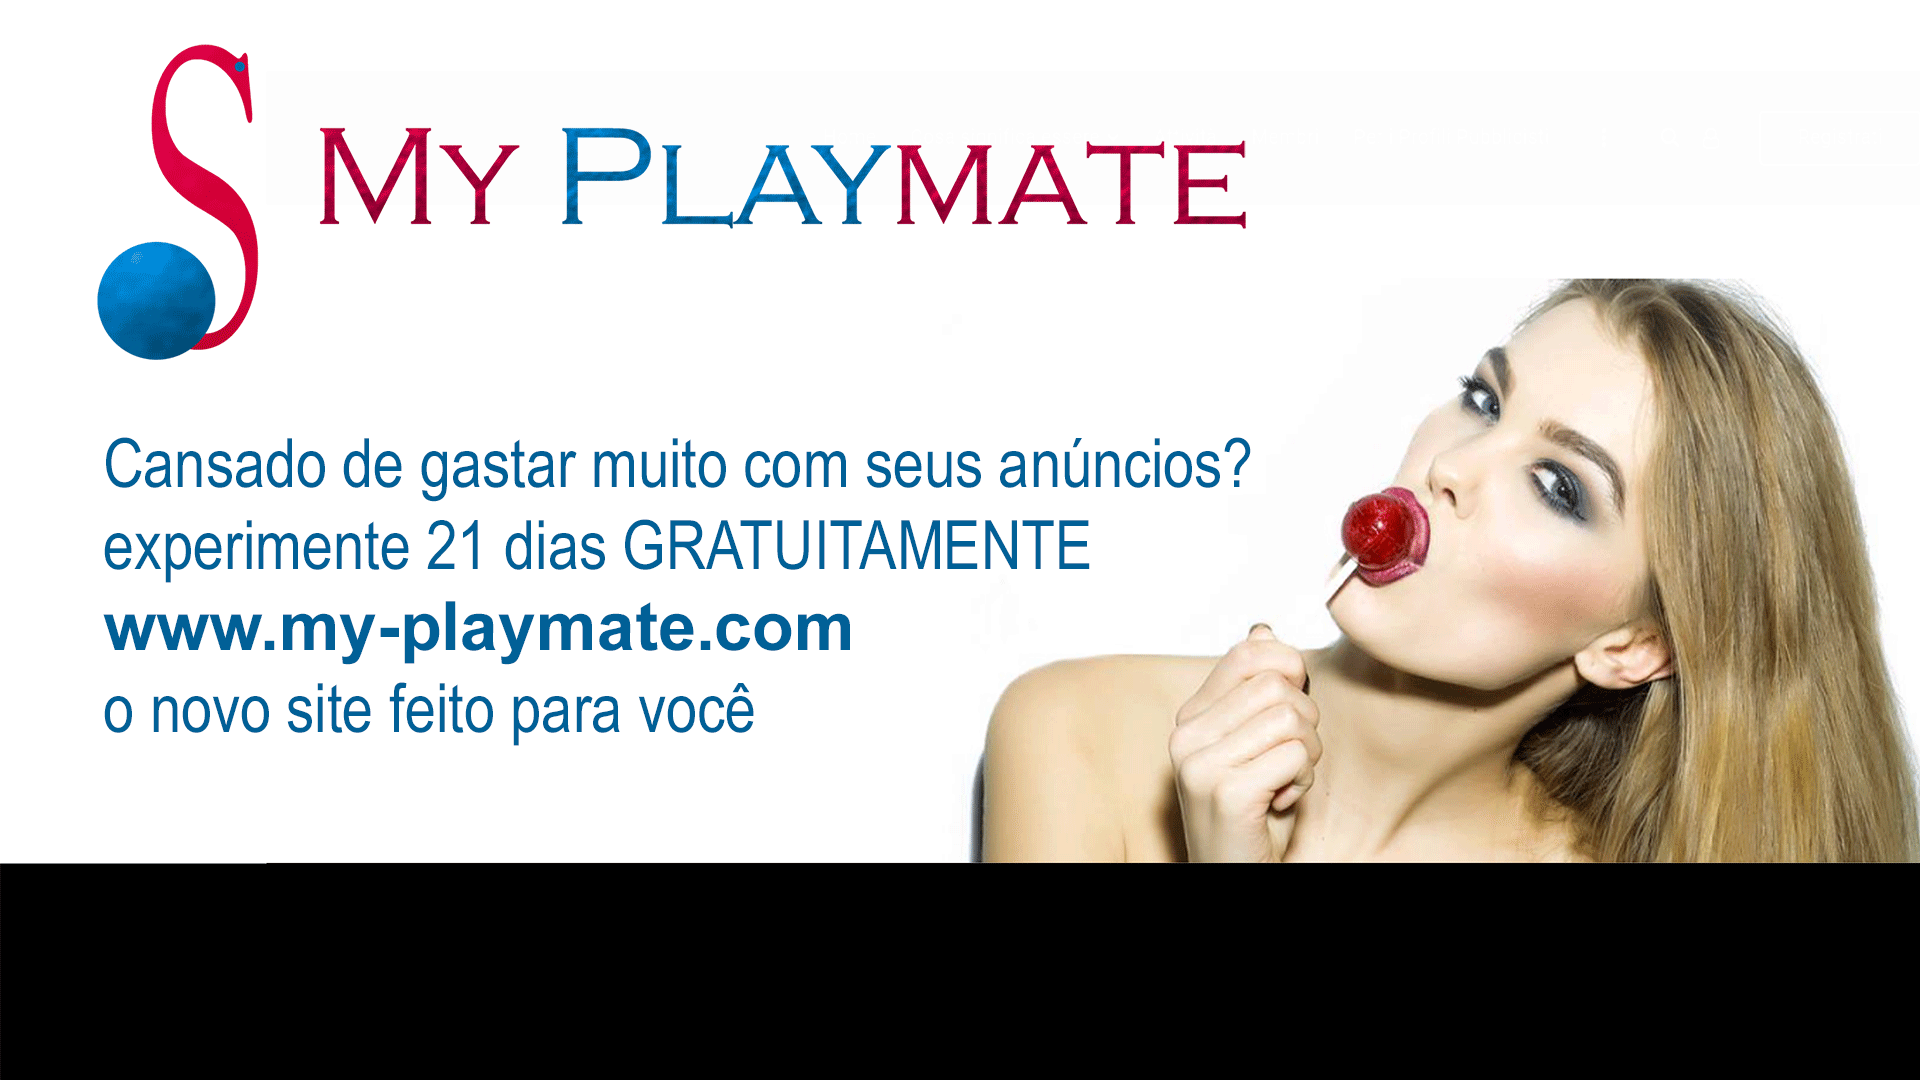 adv-my-playmate_brazil_1920x1080